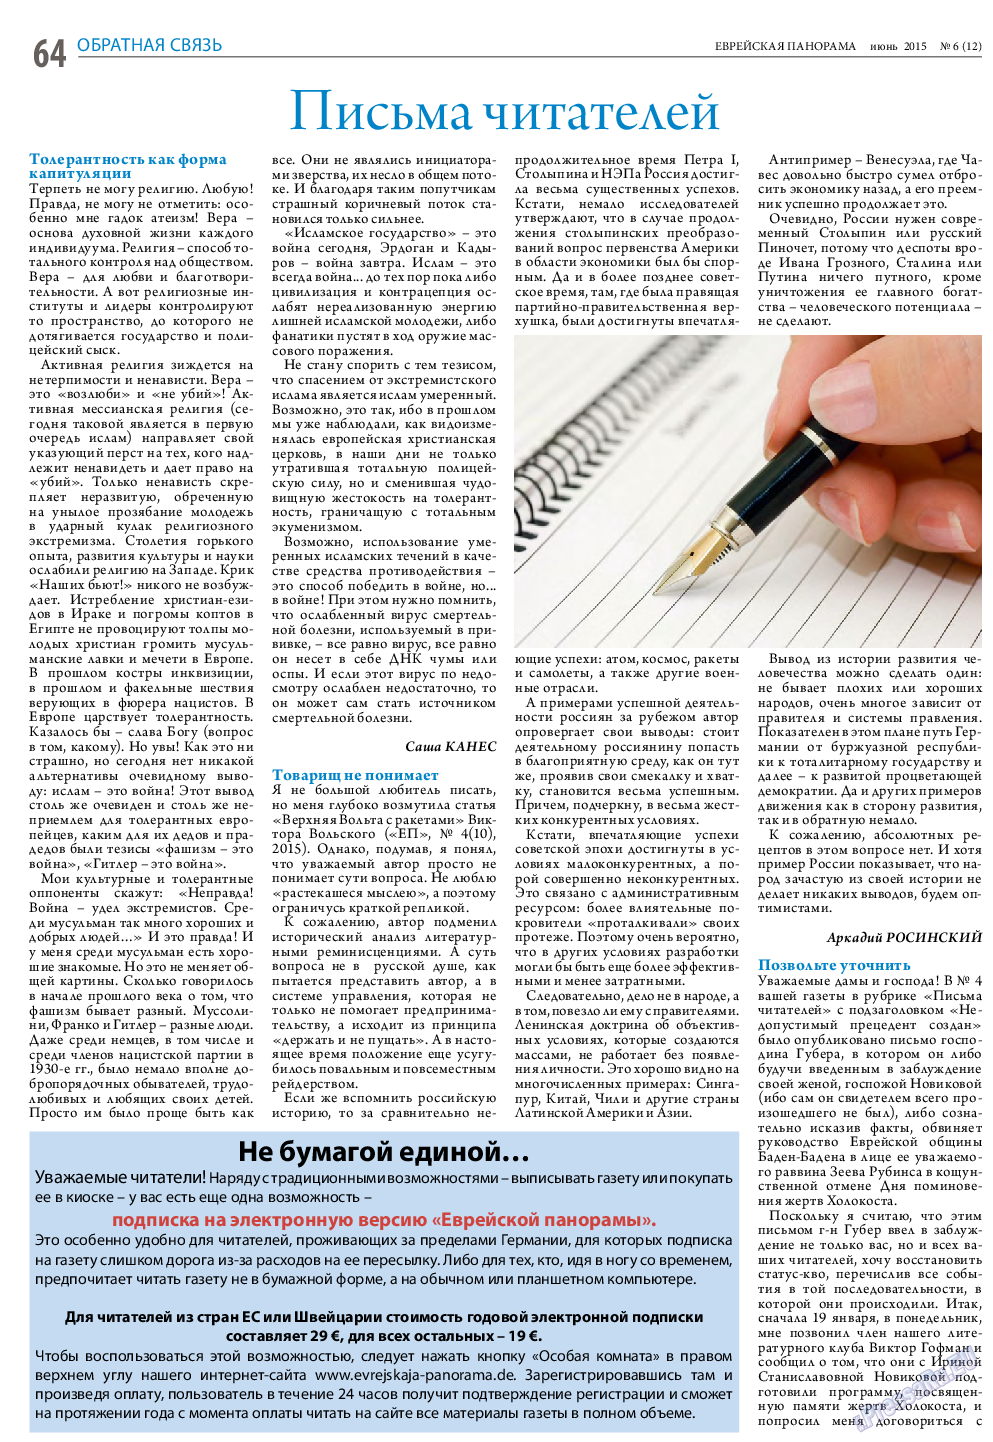 Еврейская панорама, газета. 2015 №6 стр.64